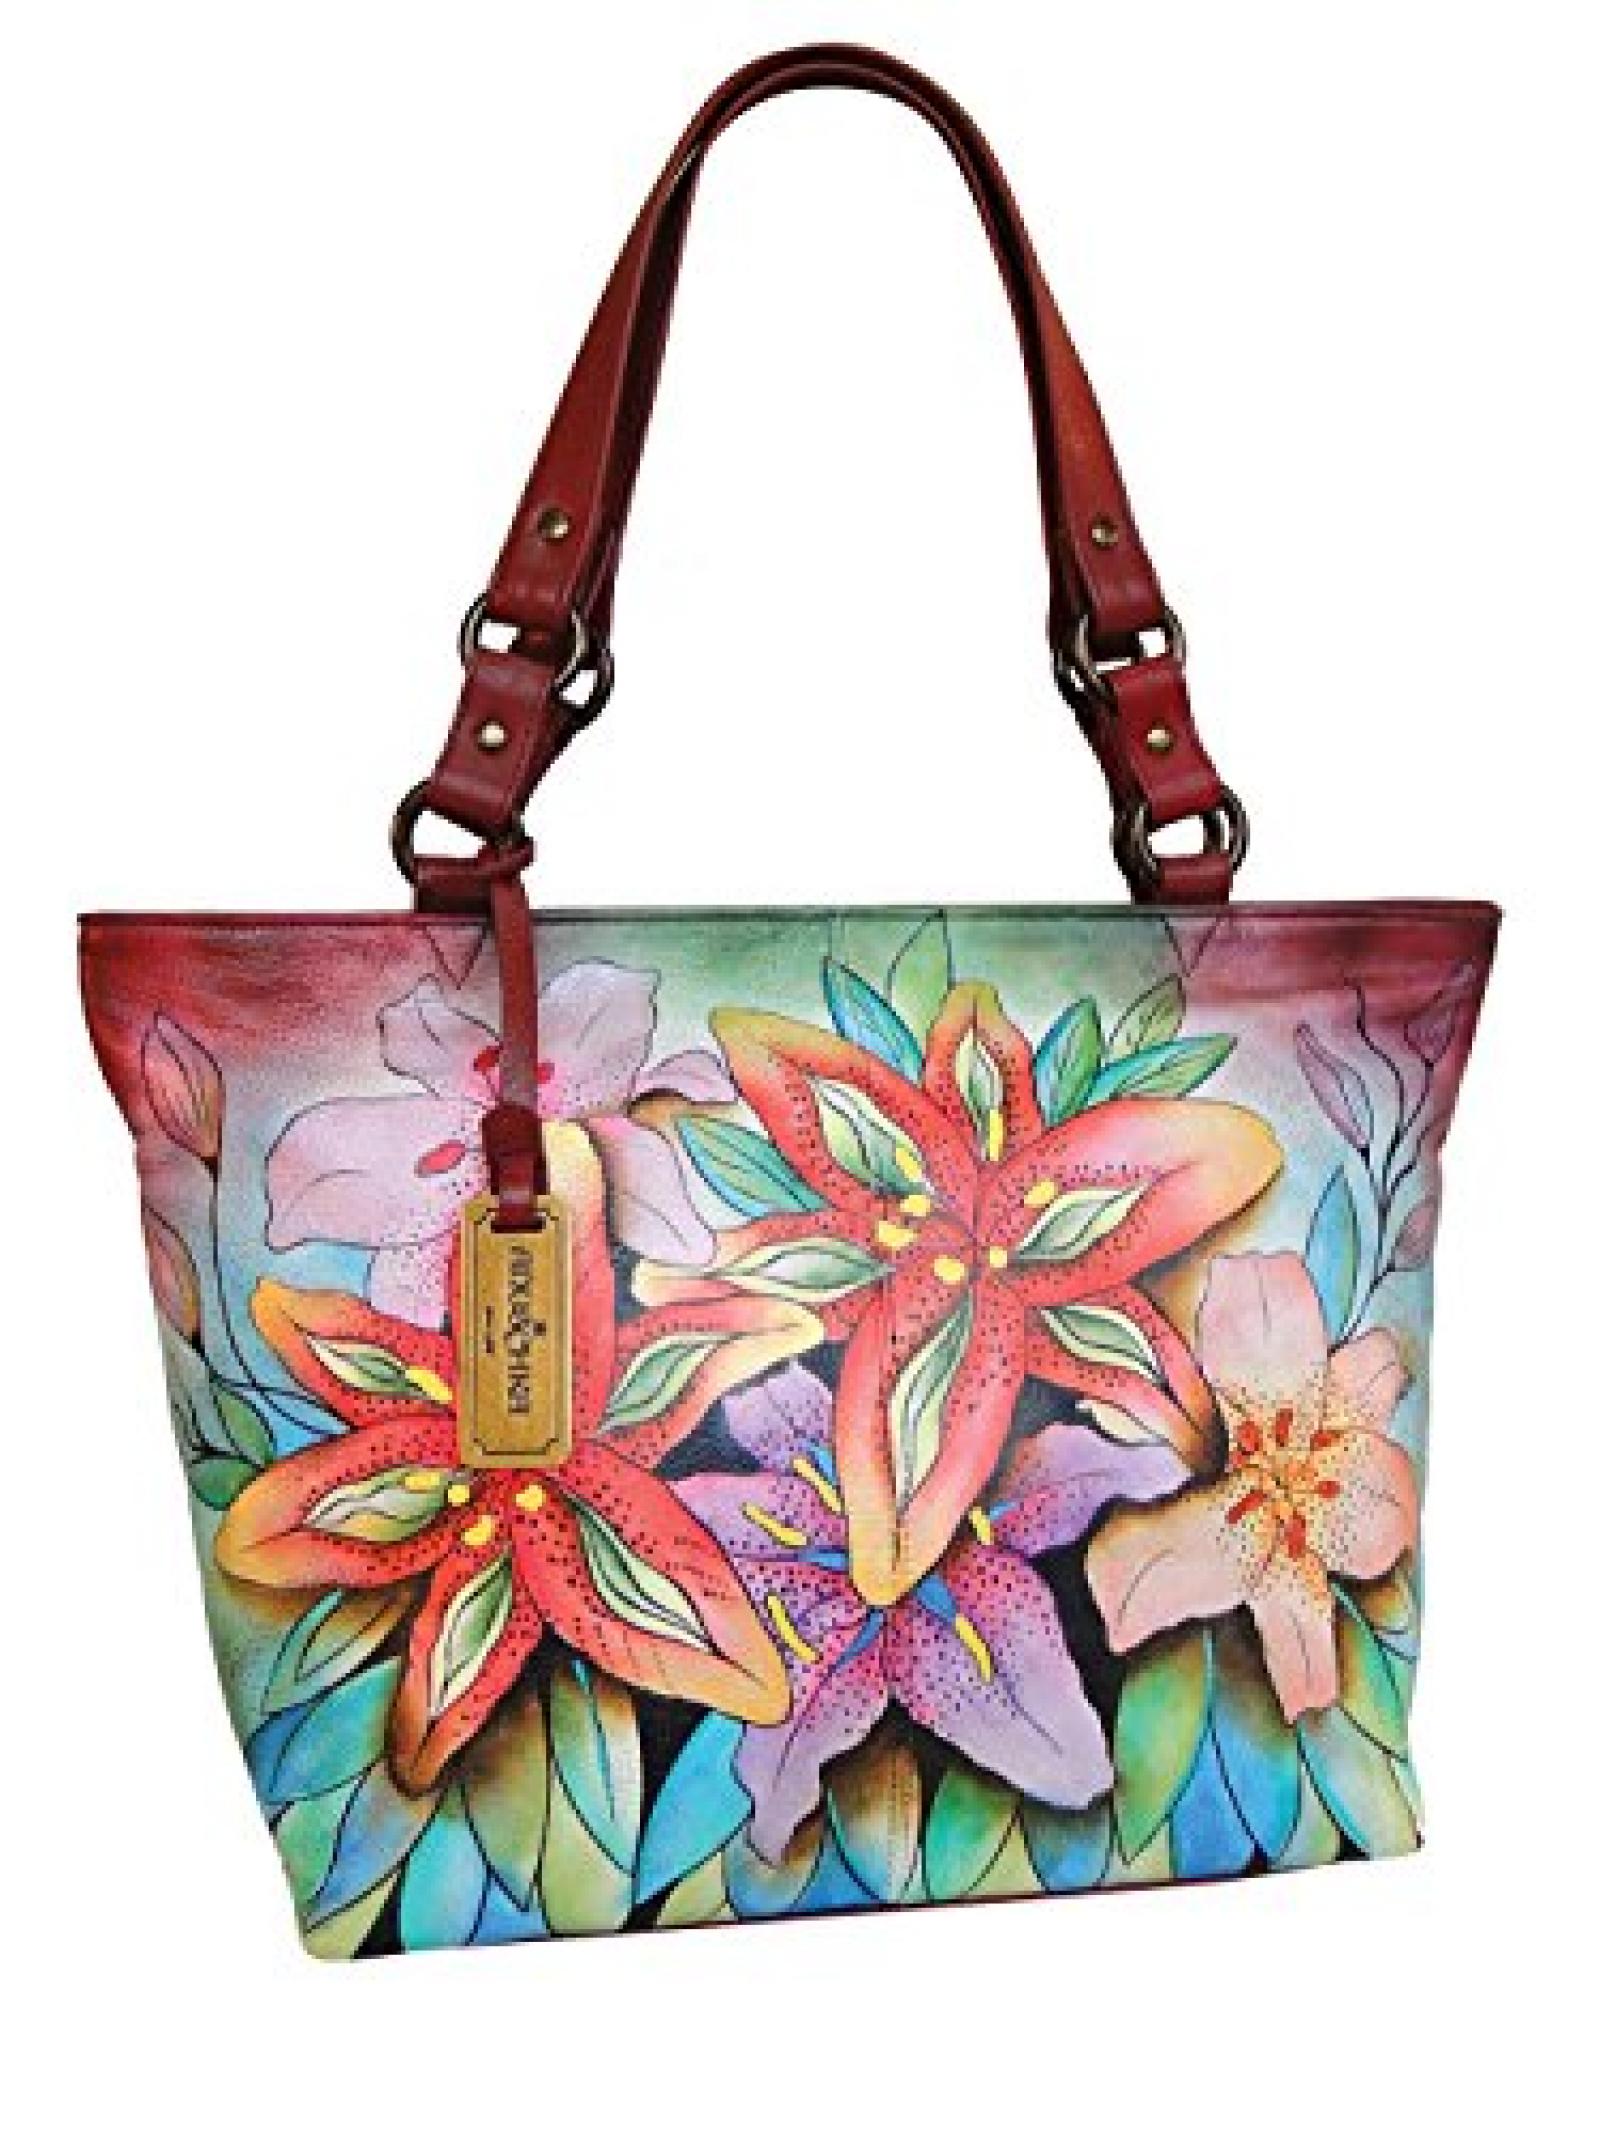 ANUSCHKA Damen Designer Leder Handtasche *UNIQUE* - FLOWERS - + GRATIS ZEITSCHRIFT JOLIE 